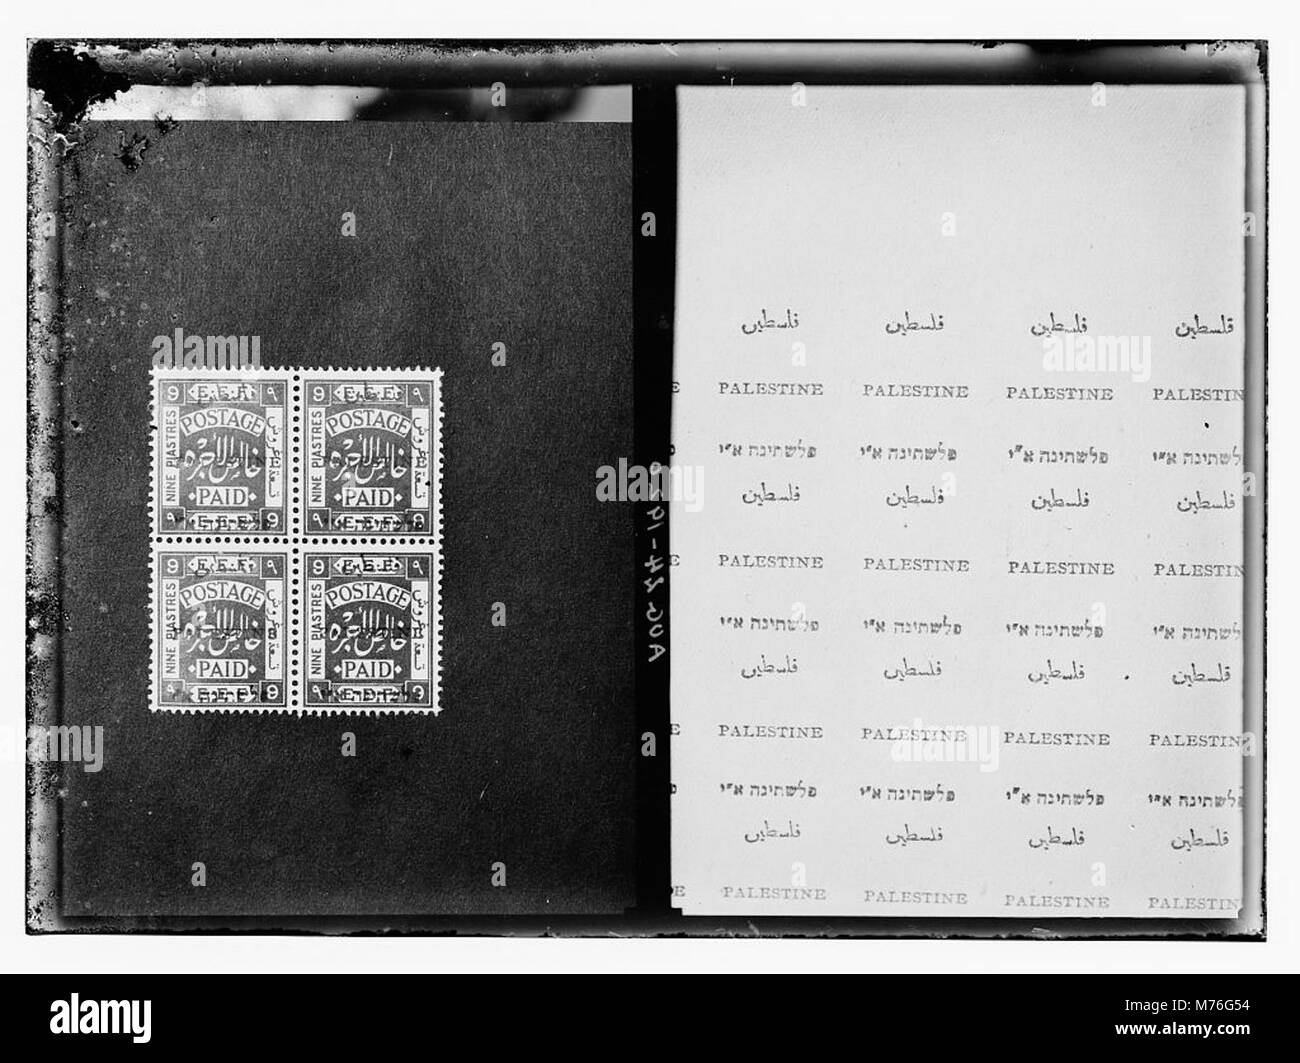 Pal. (i.e., Palestine) postage stamps, Aug. 24, 1920 LOC matpc.08807 Stock Photo